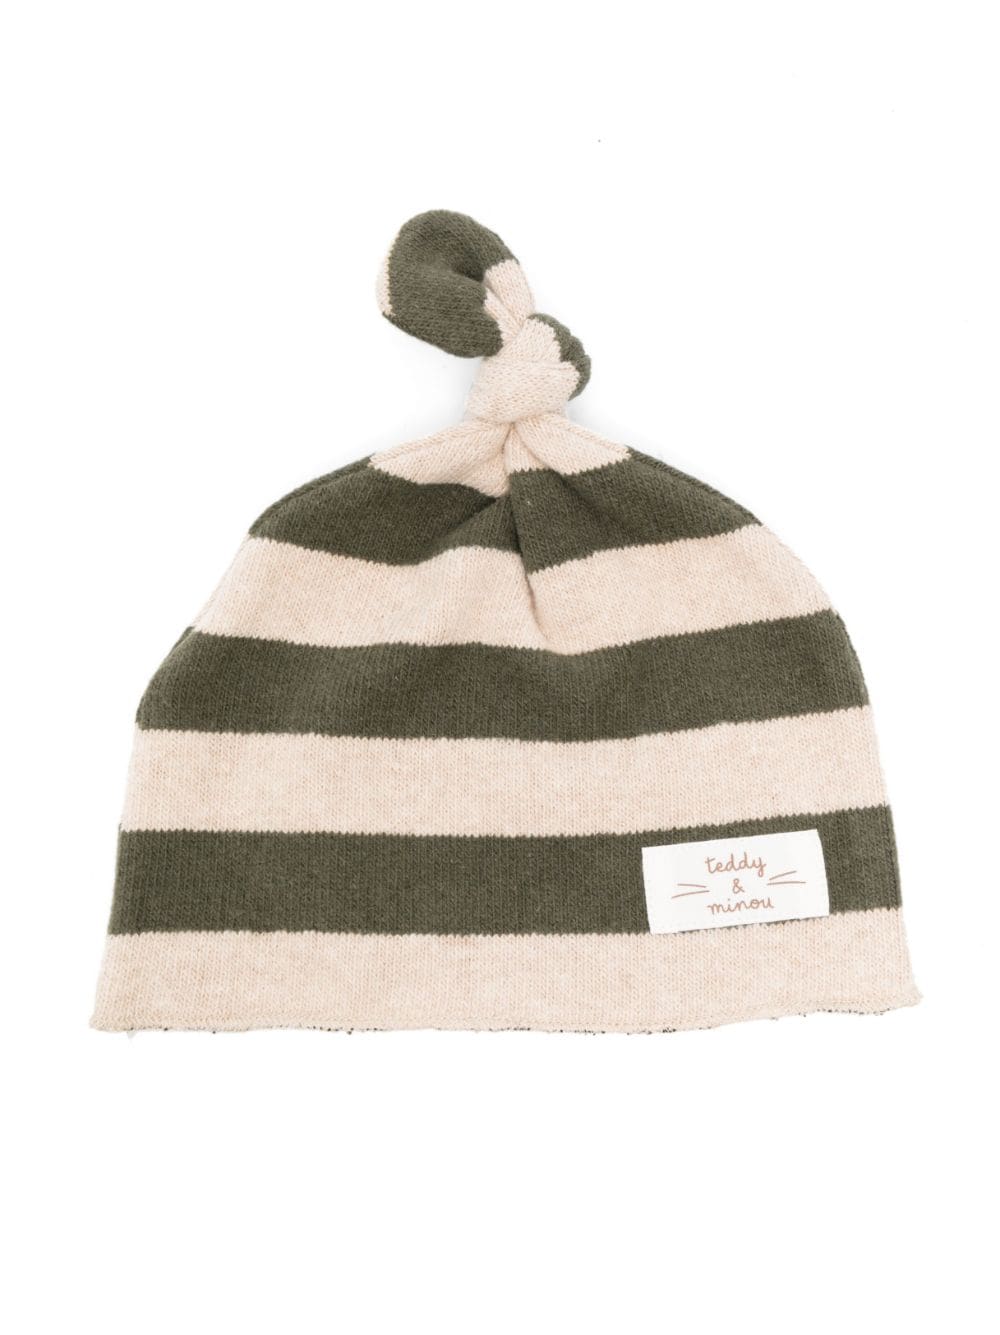 TEDDY & MINOU striped knitted beanie - Green von TEDDY & MINOU